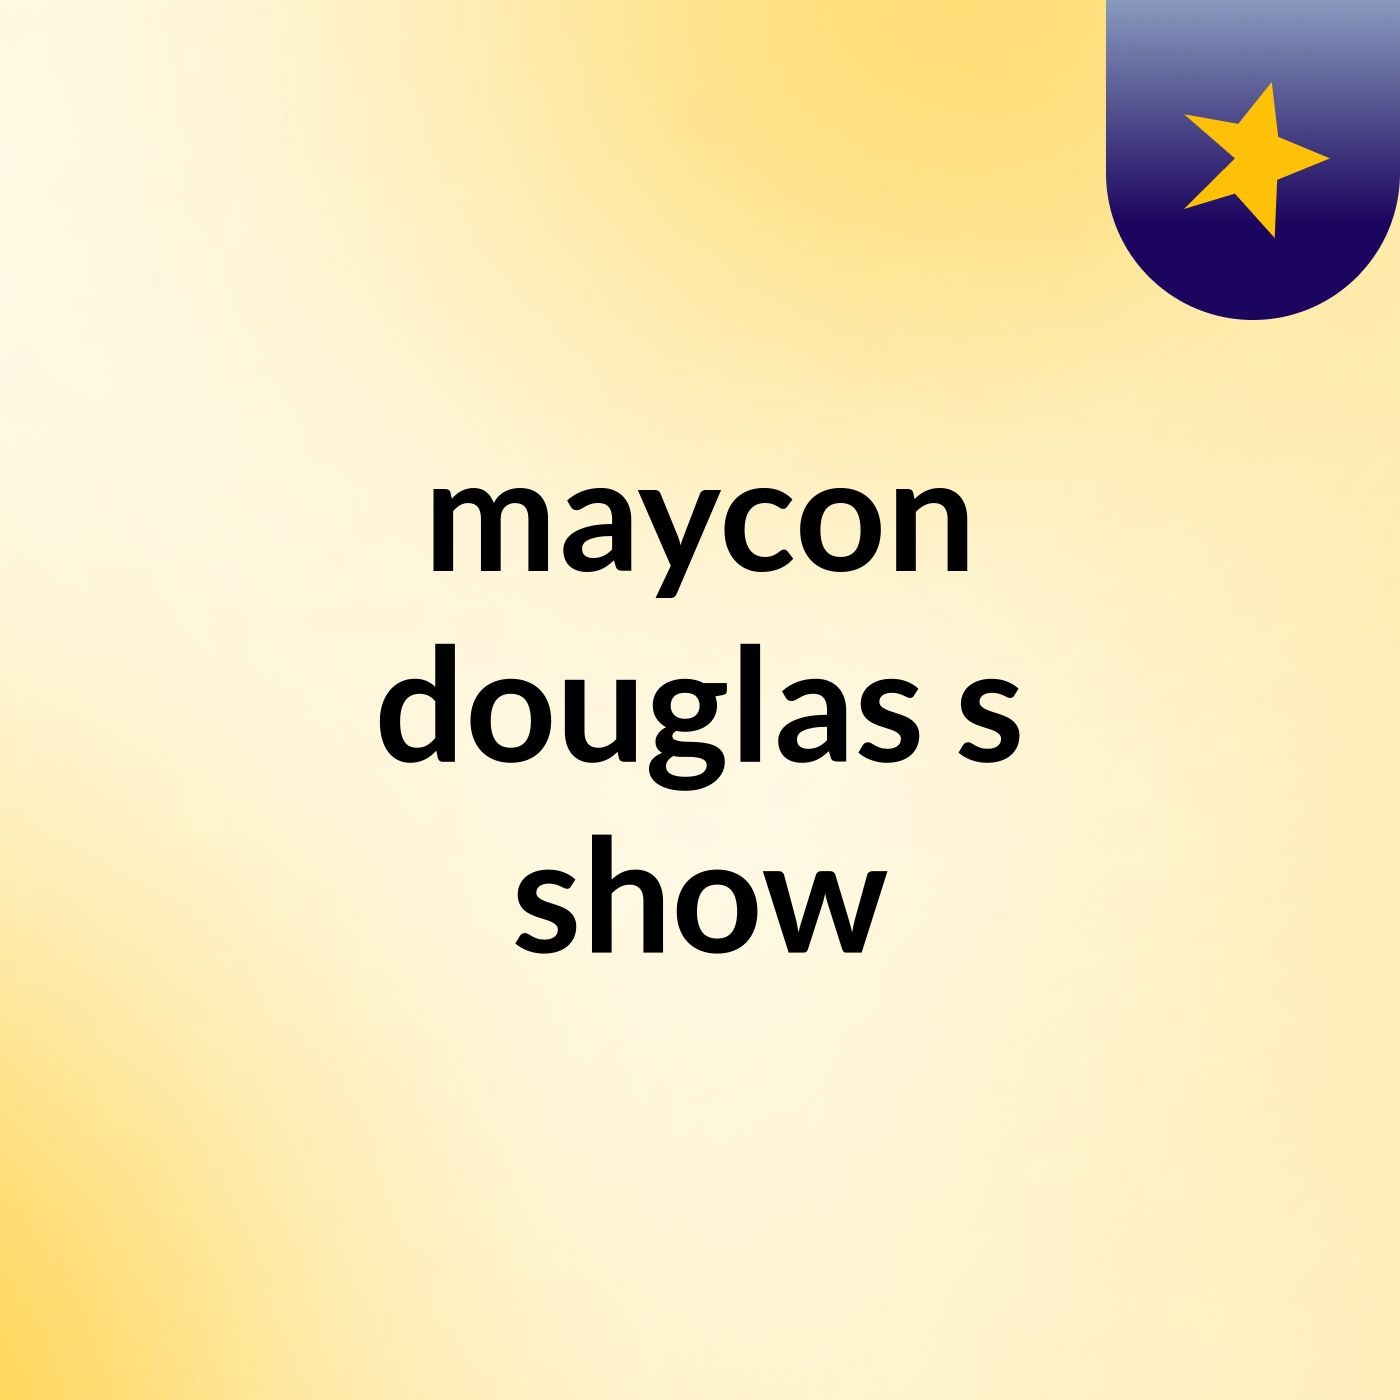 maycon douglas's show